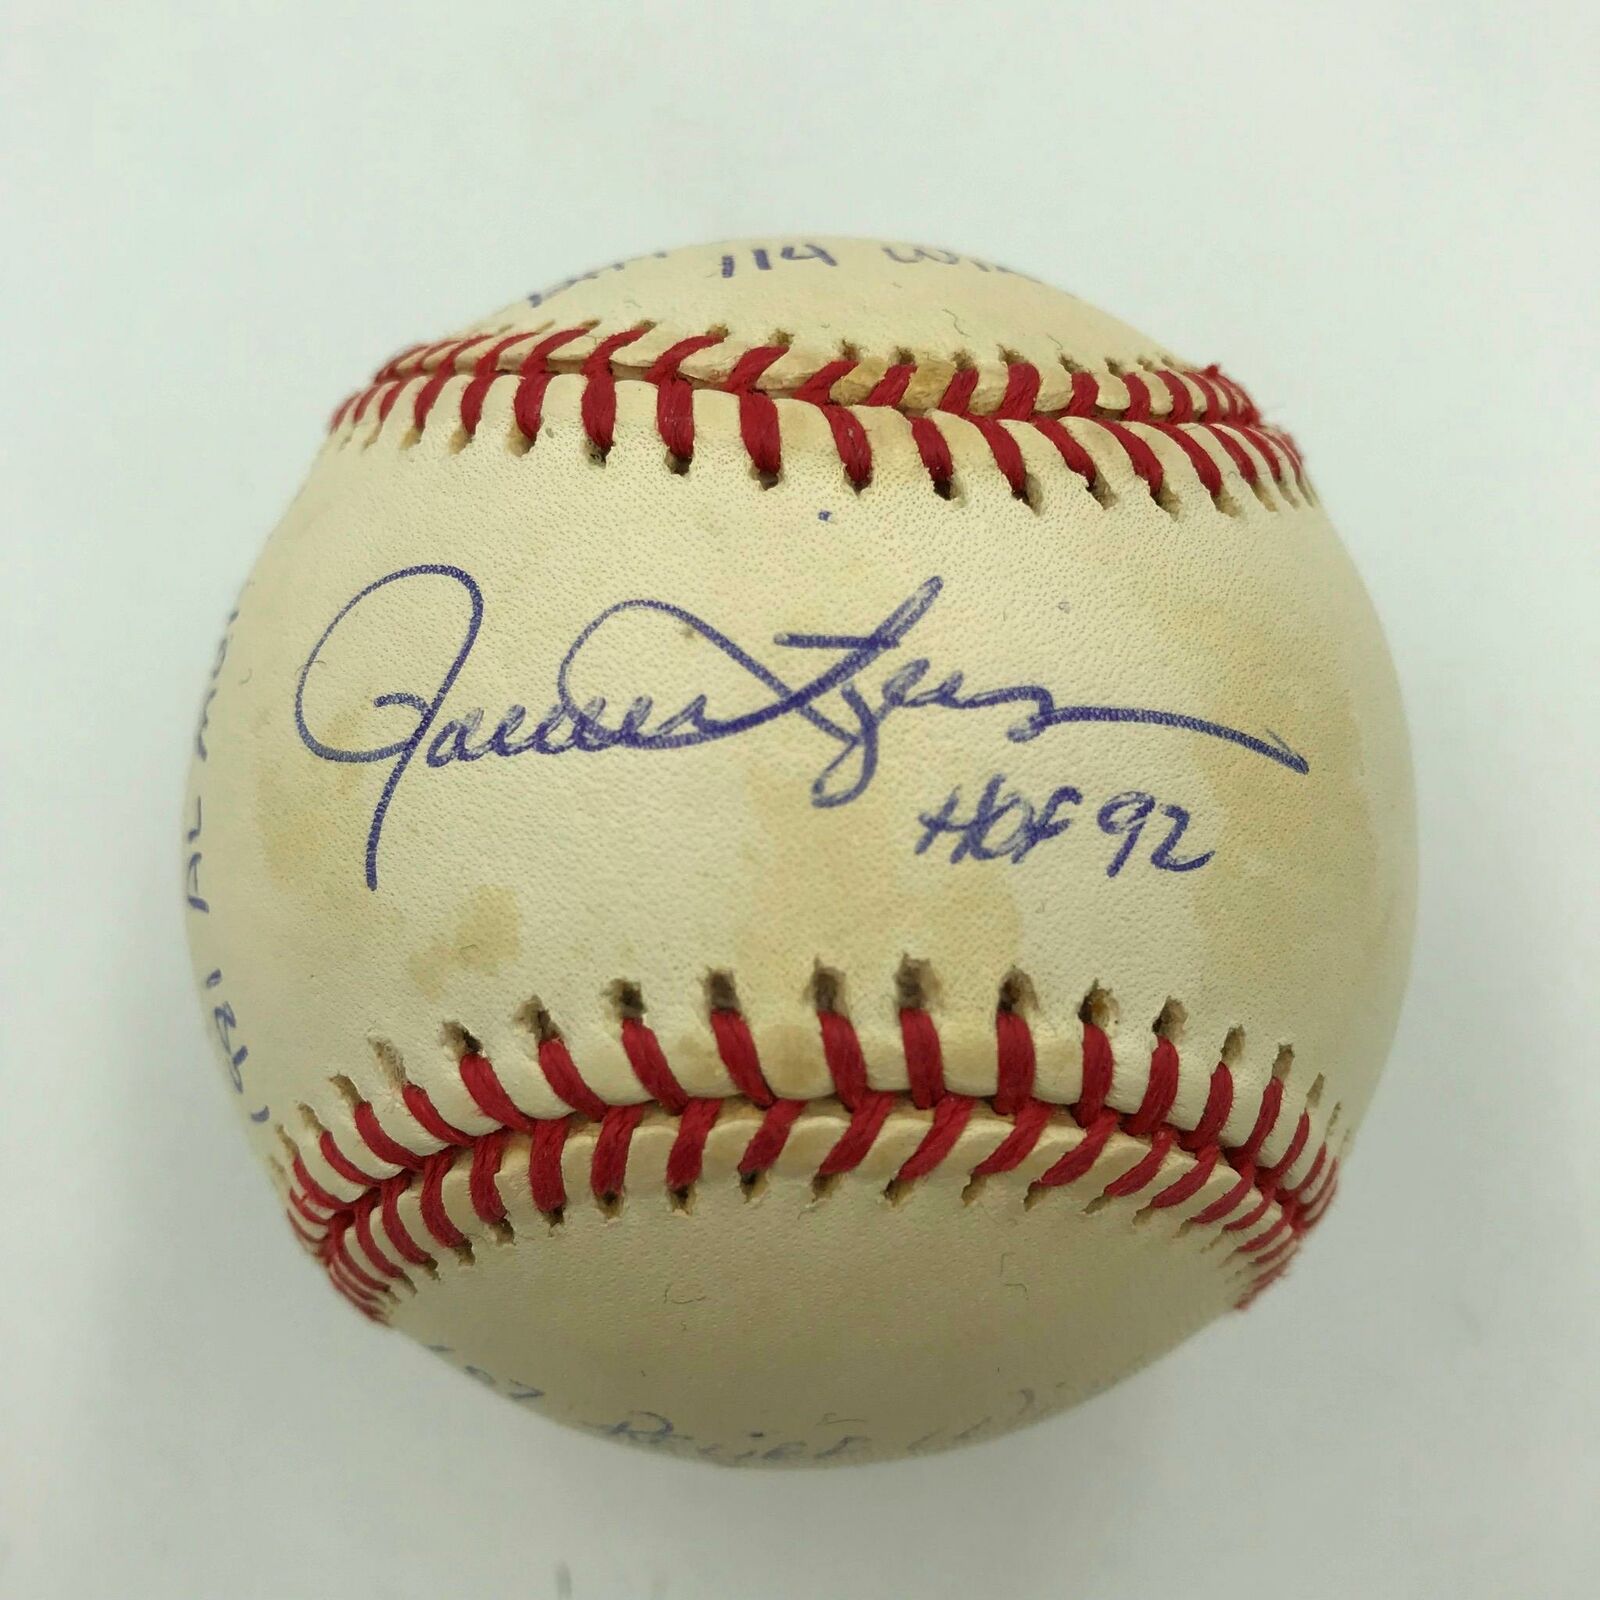 Rollie Fingers HOF 92 Autographed Baseball